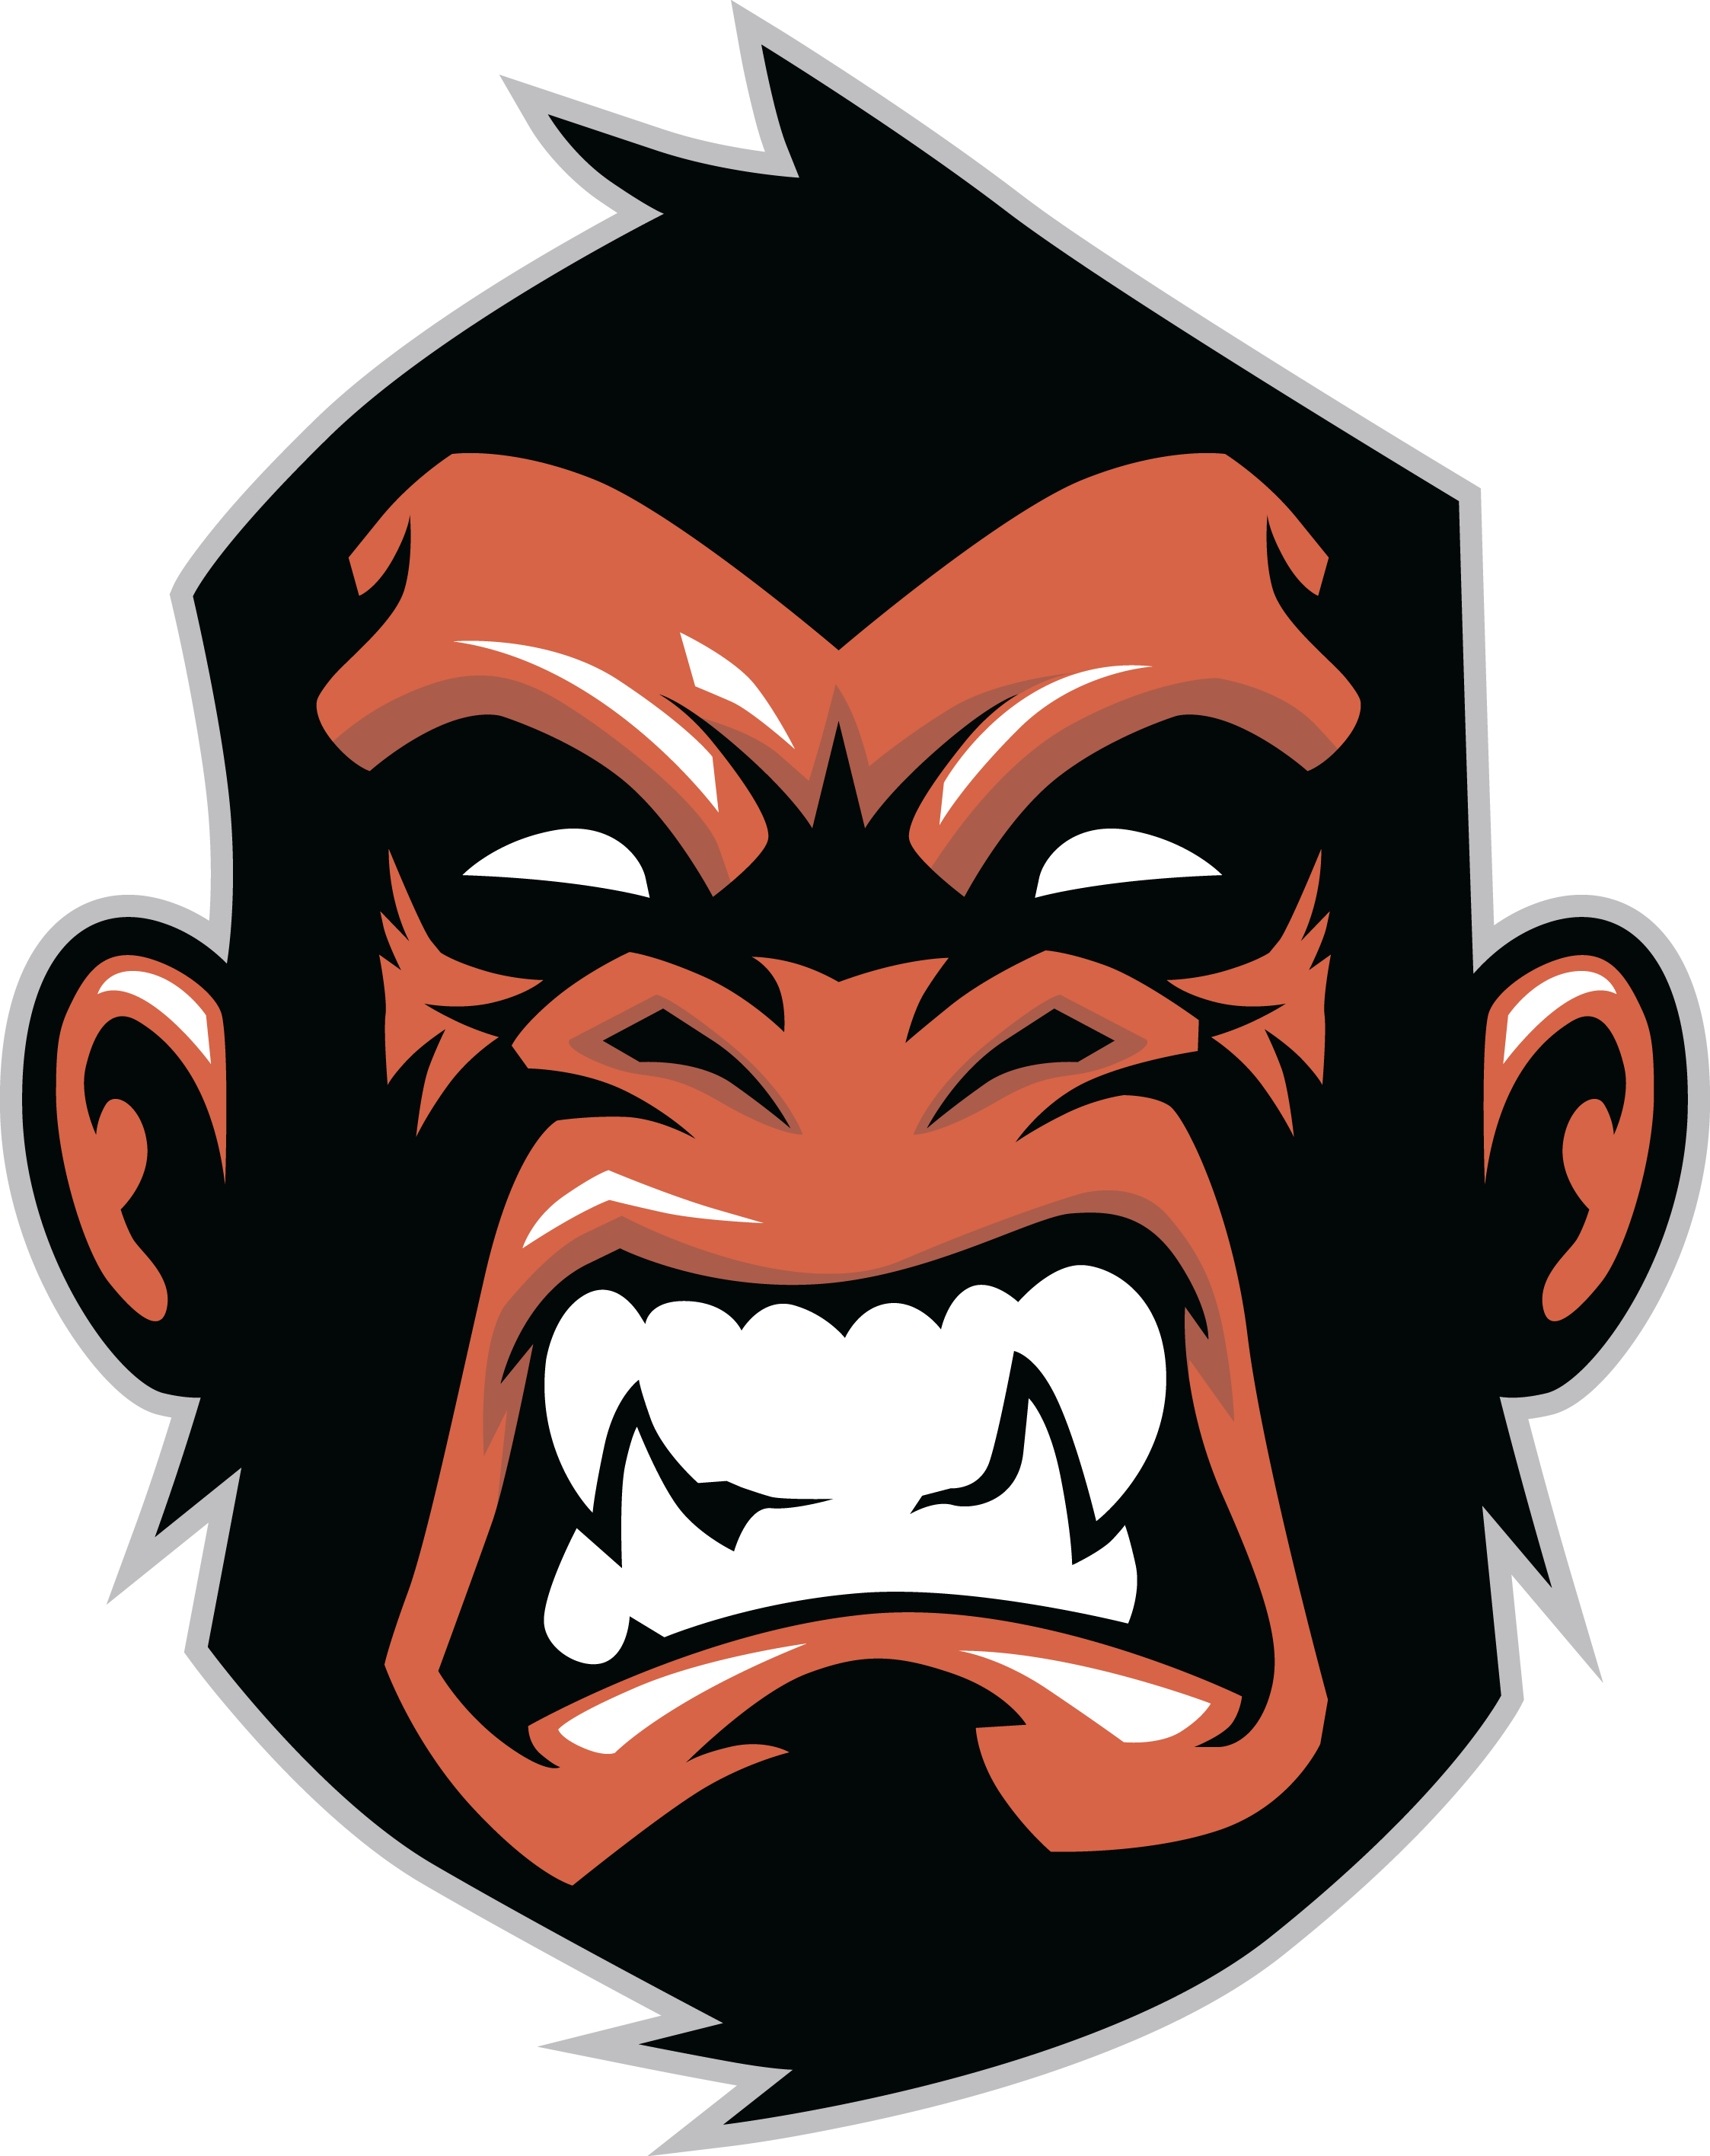 Gorilla clipart mascot. Chimpanzee logo monkey transprent